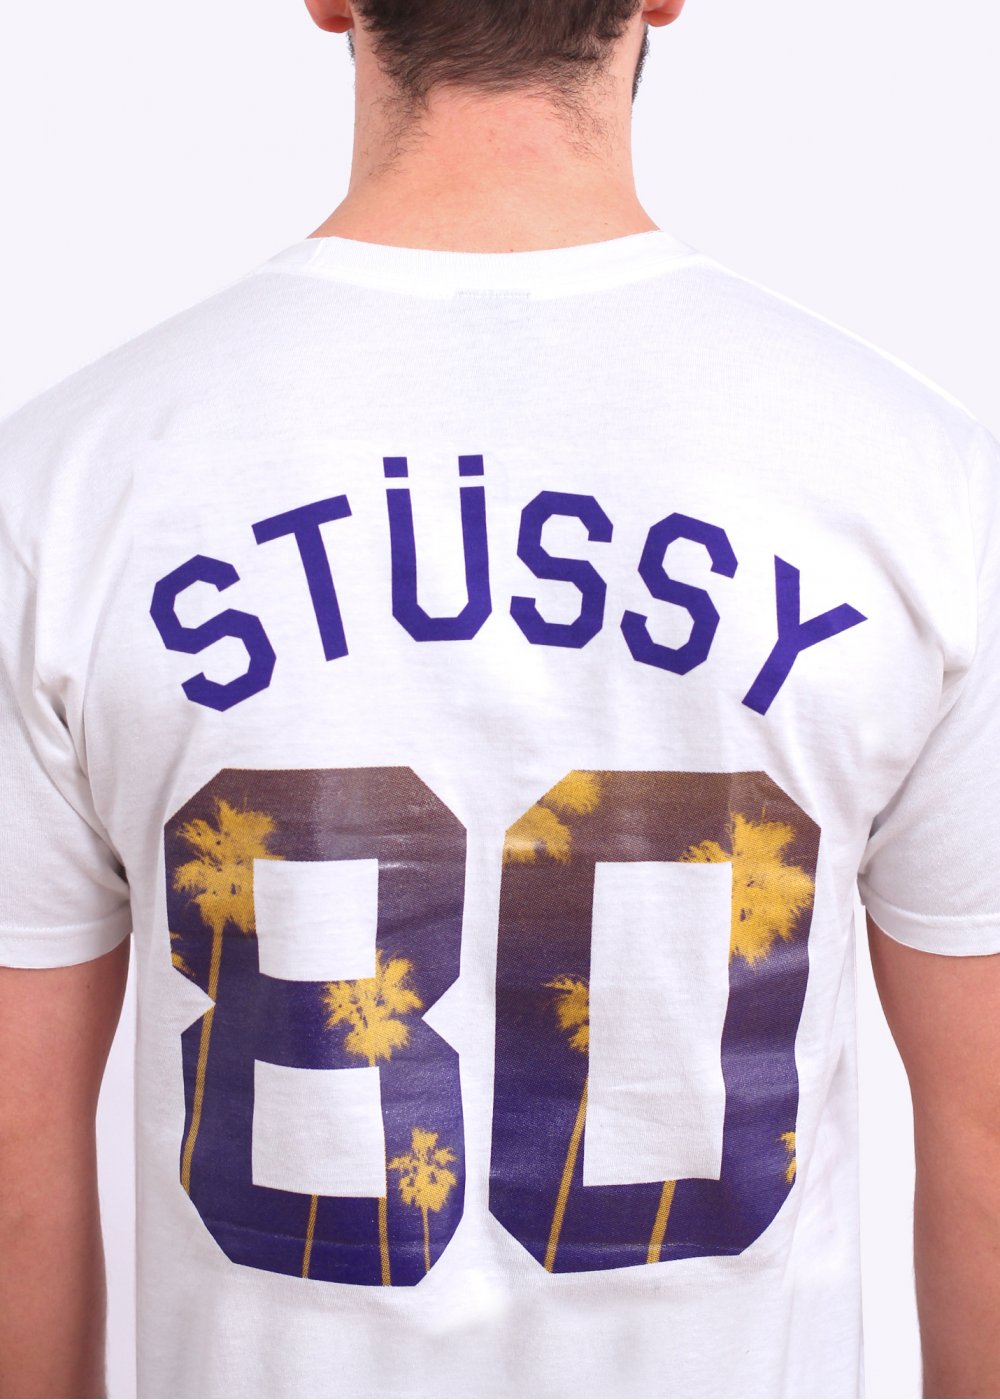 ... › Triads Mens › T-shirts › Stussy › Stussy LA 80 Tee - White